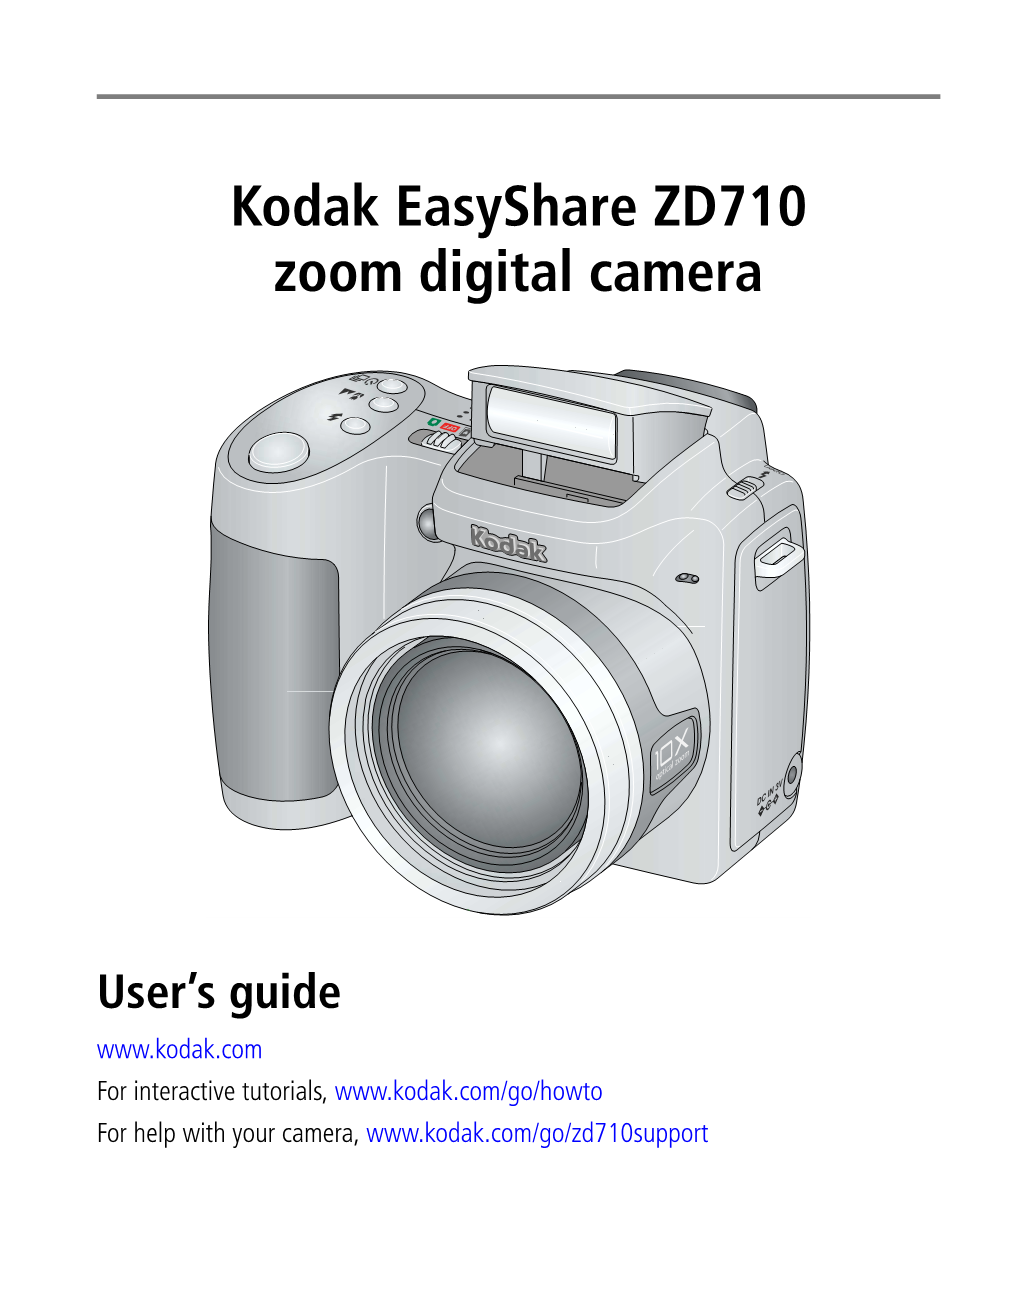 Kodak Easyshare ZD710 Zoom Digital Camera